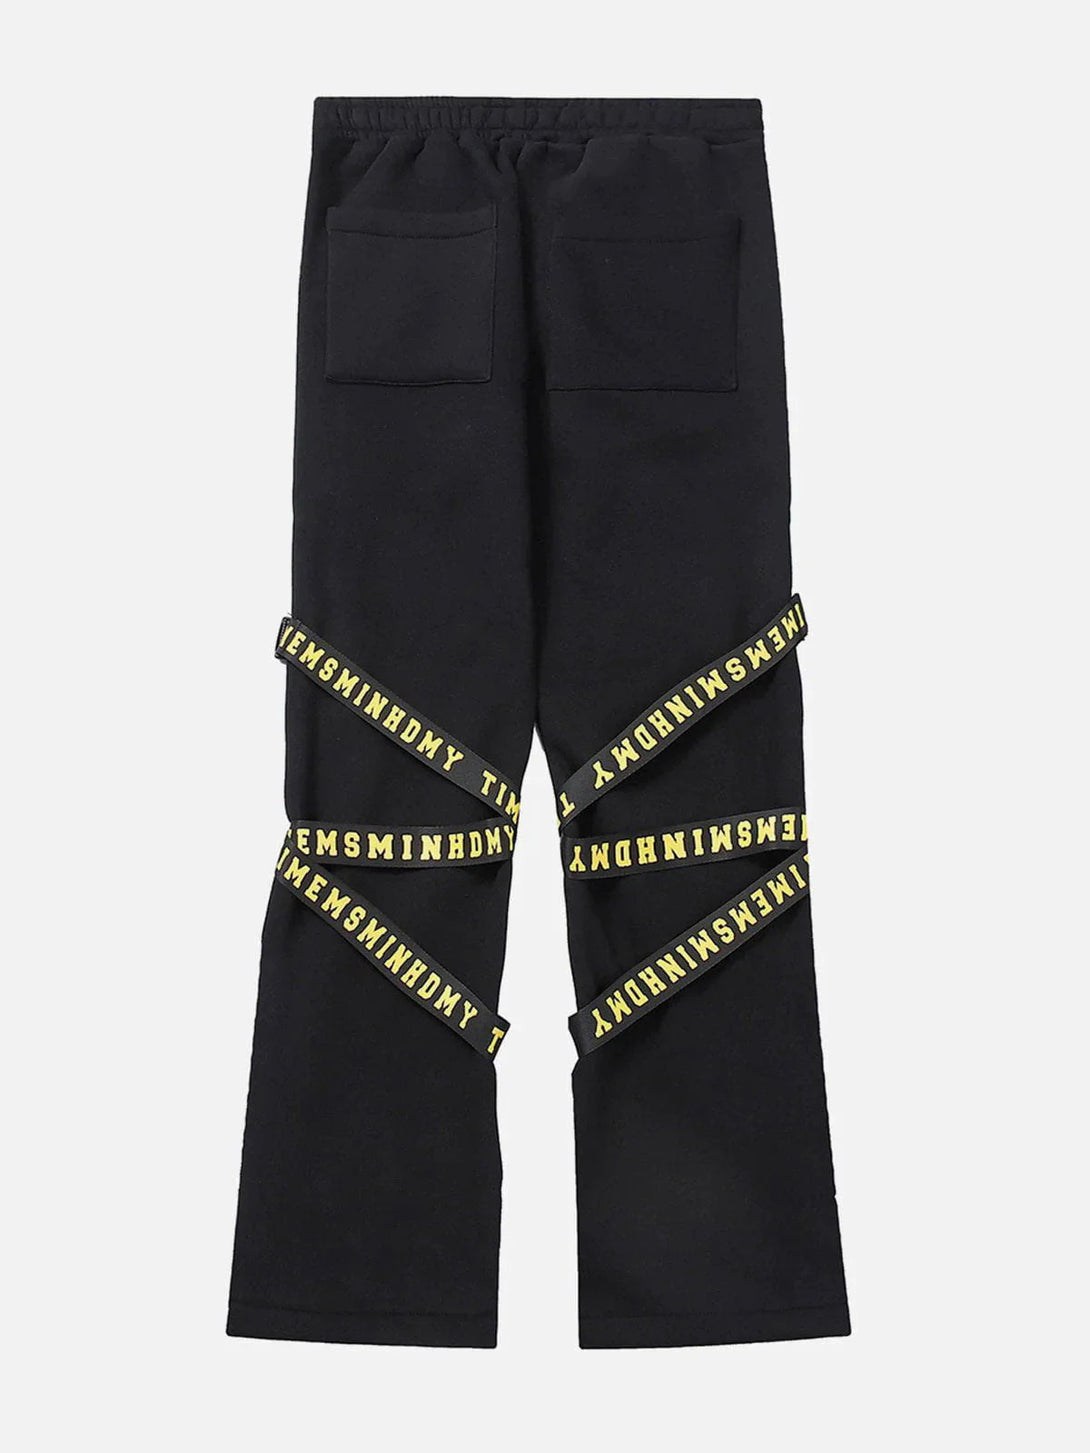 Majesda® - Leg Tie Design Pants outfit ideas streetwear fashion